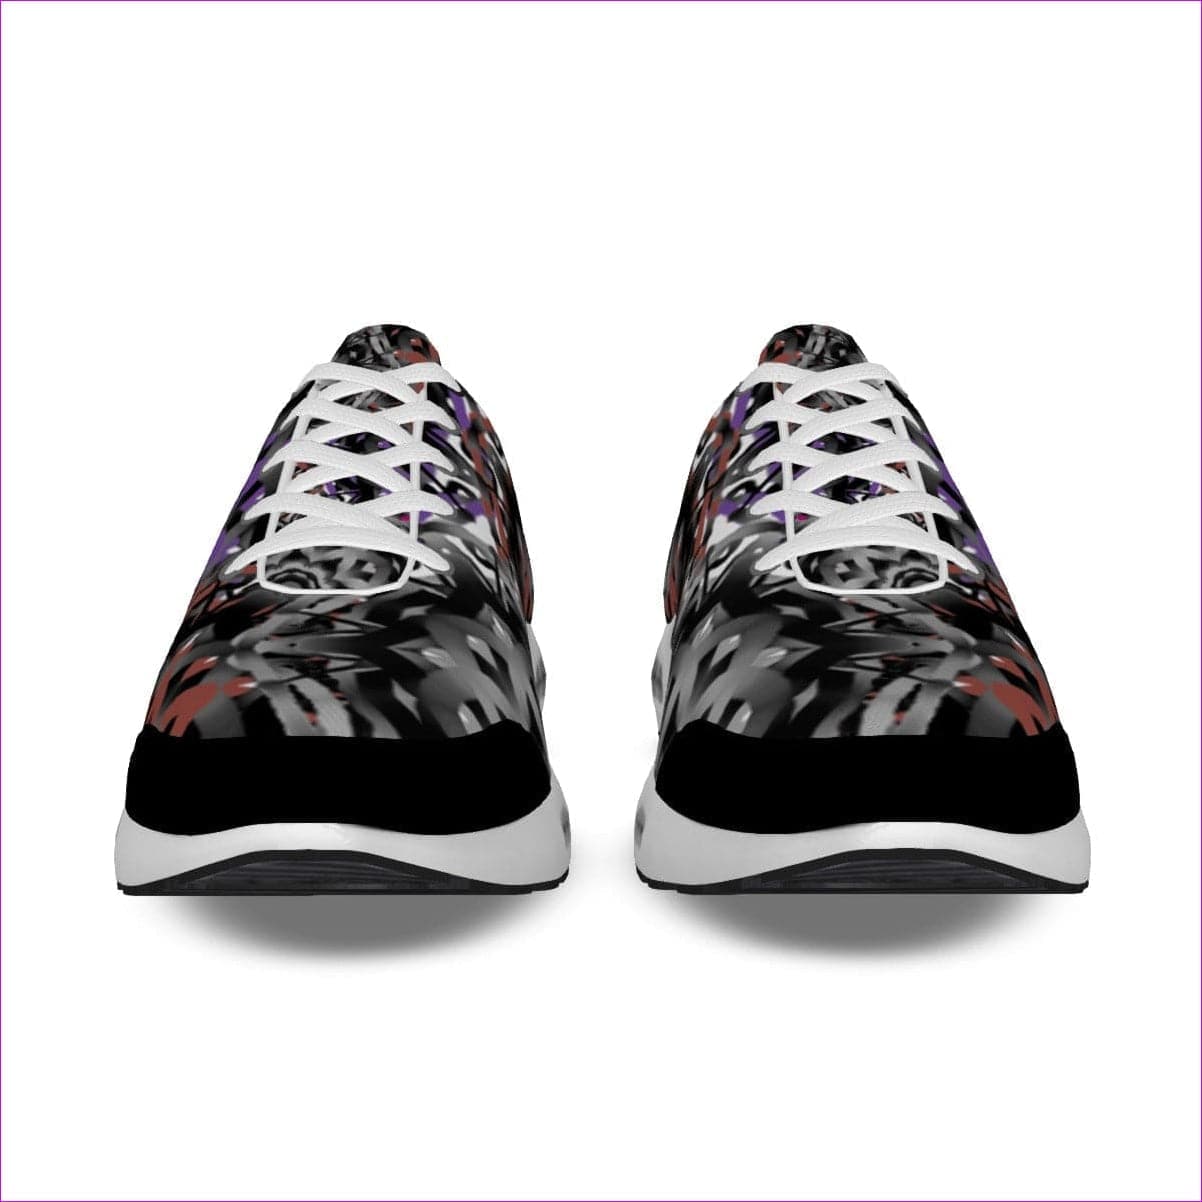 - Mandala Graffiti Womens Air Cushion Sports Shoes - unisex sneakers at TFC&H Co.